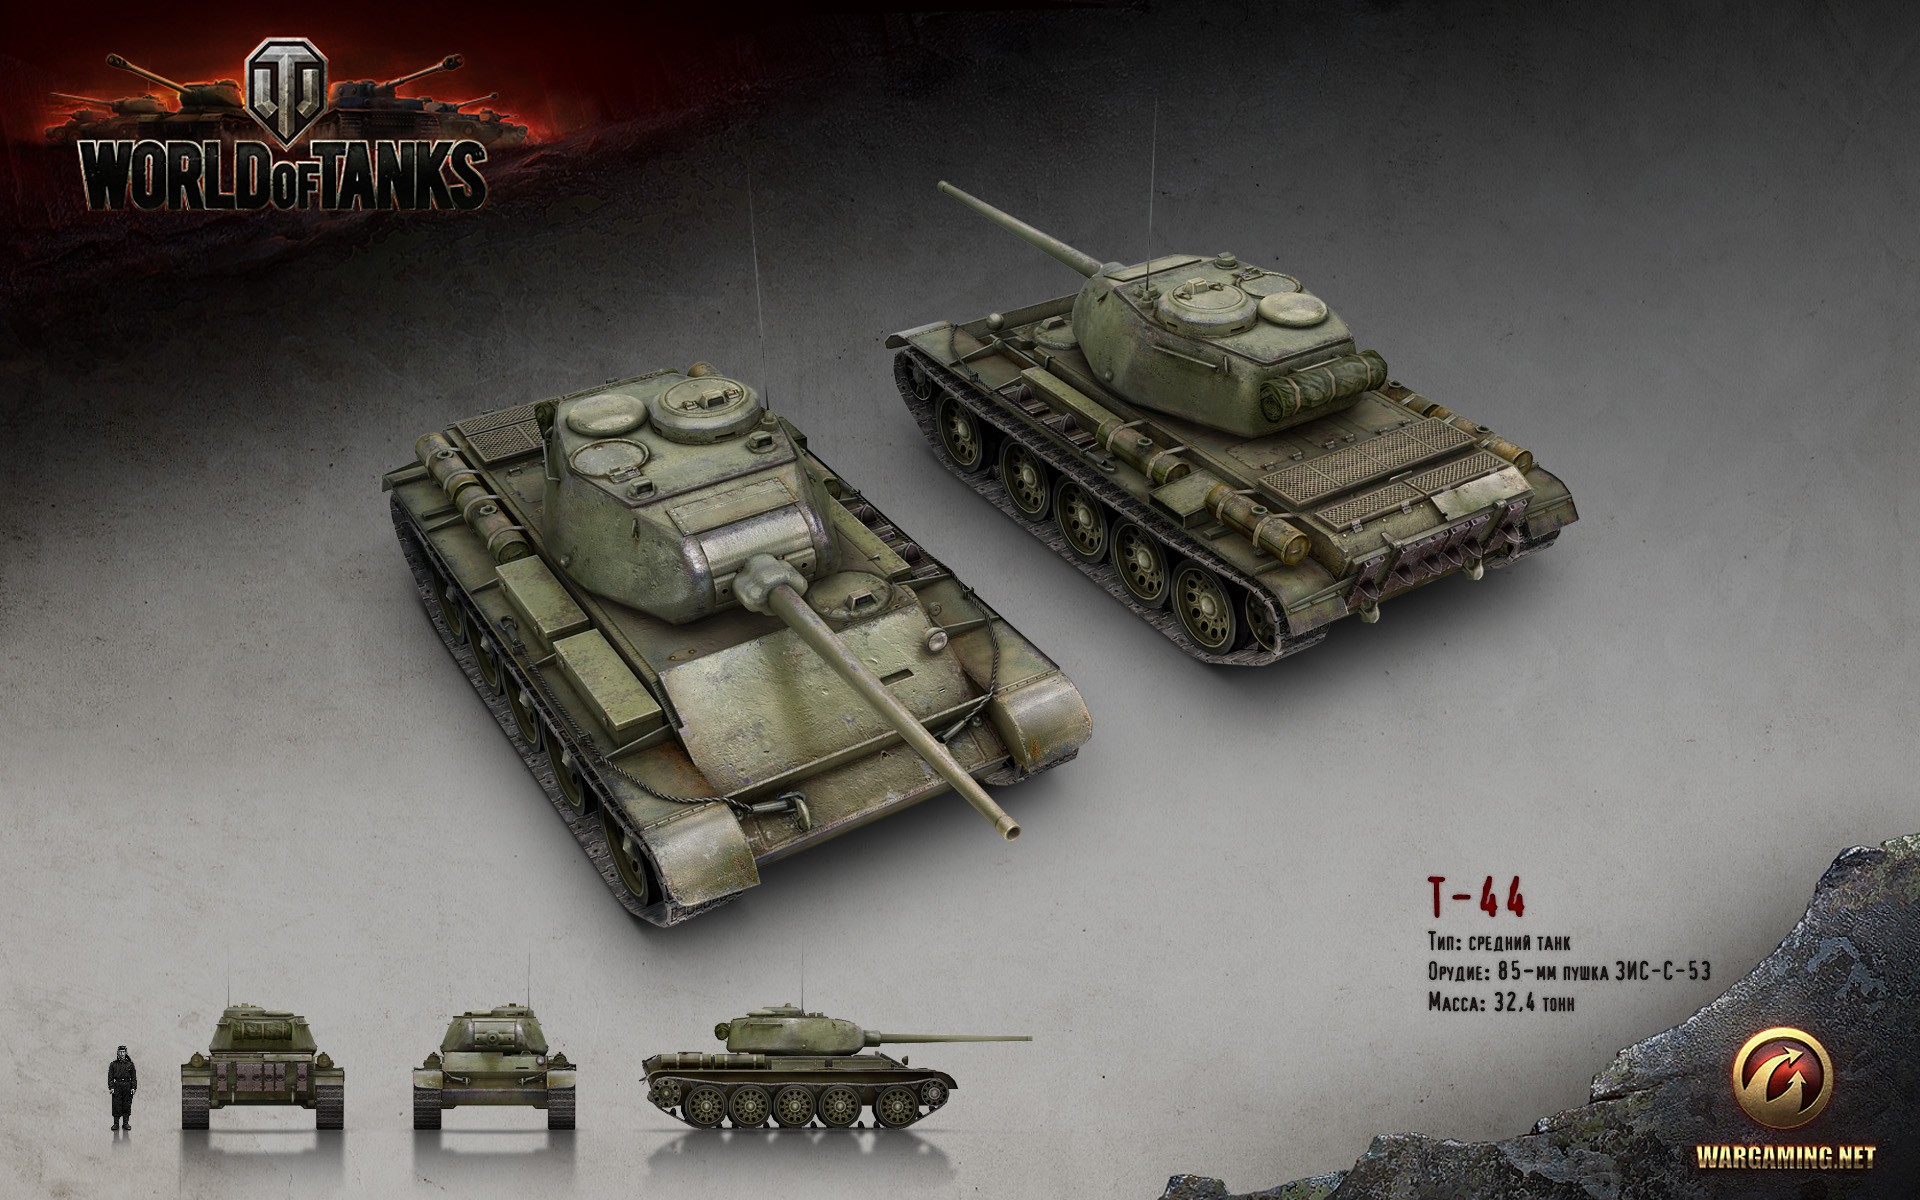 General 1920x1200 World of Tanks tank wargaming video games Russian/Soviet tanks